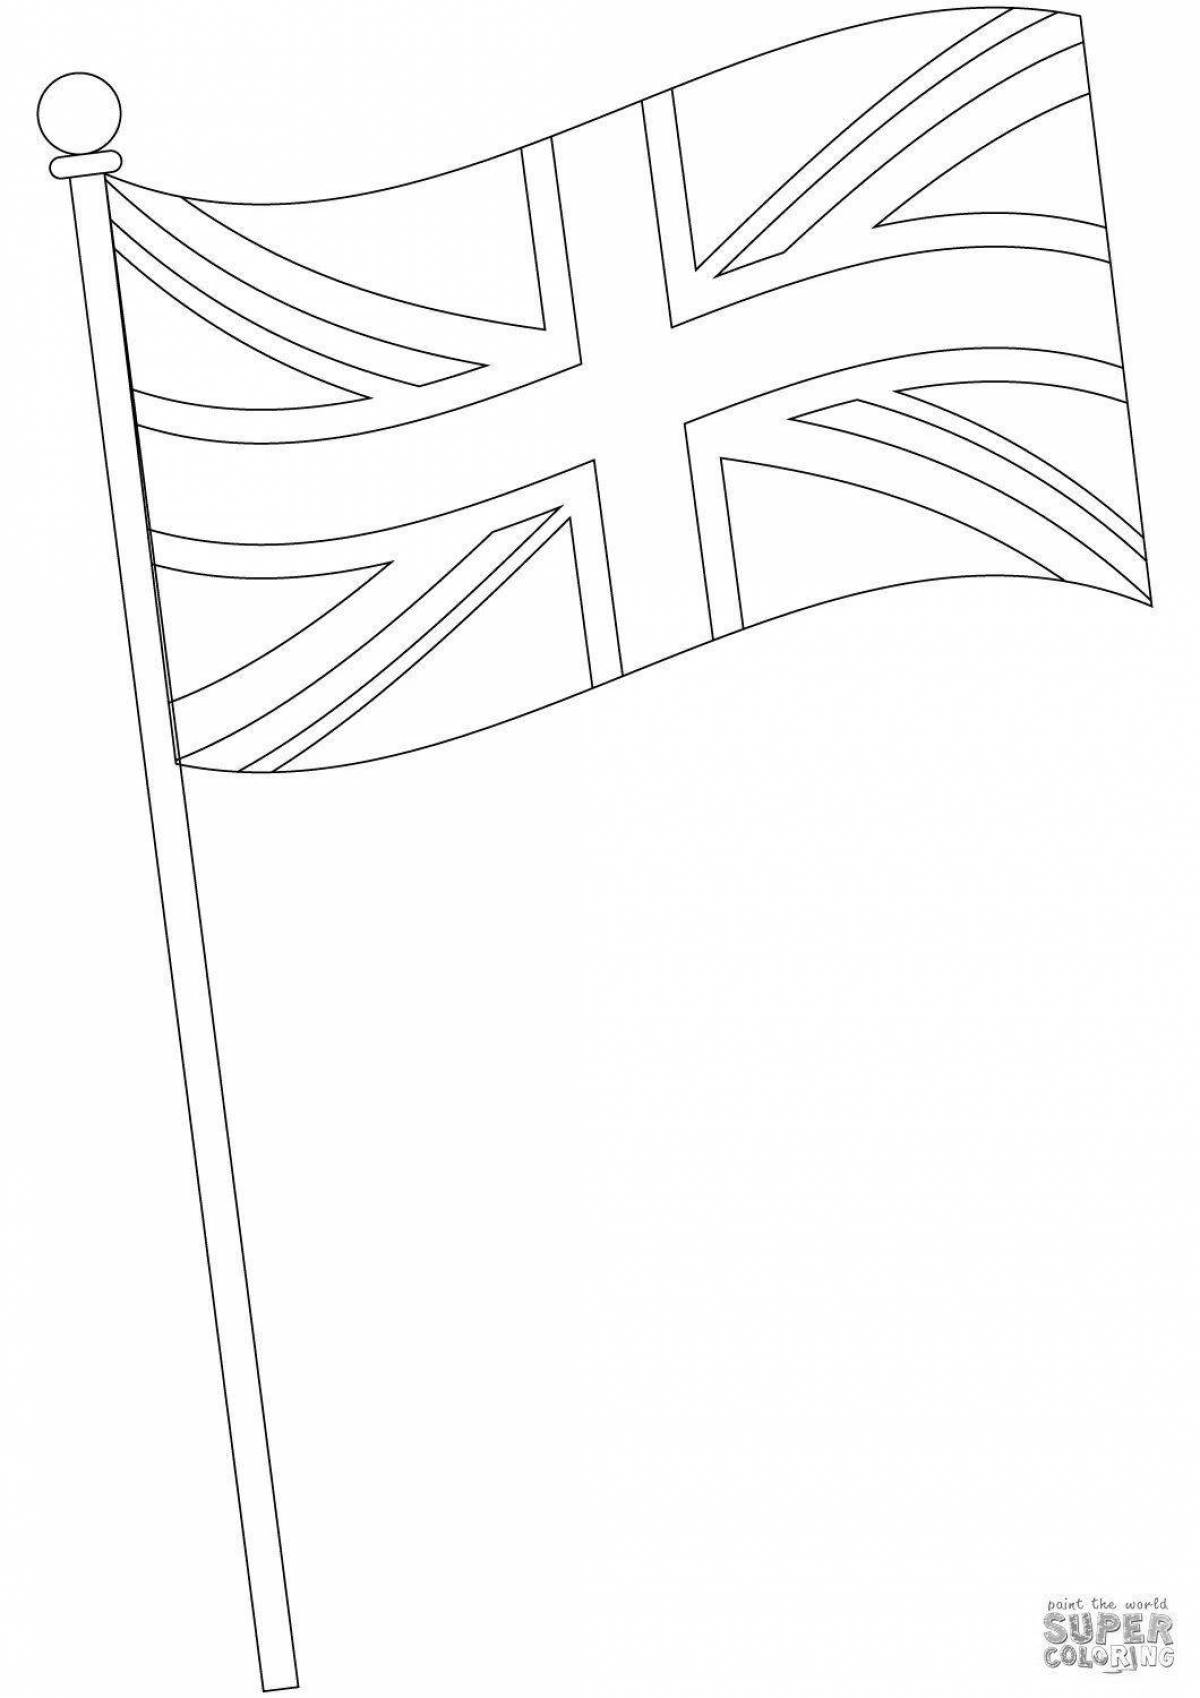 Exquisite coloring of the British flag